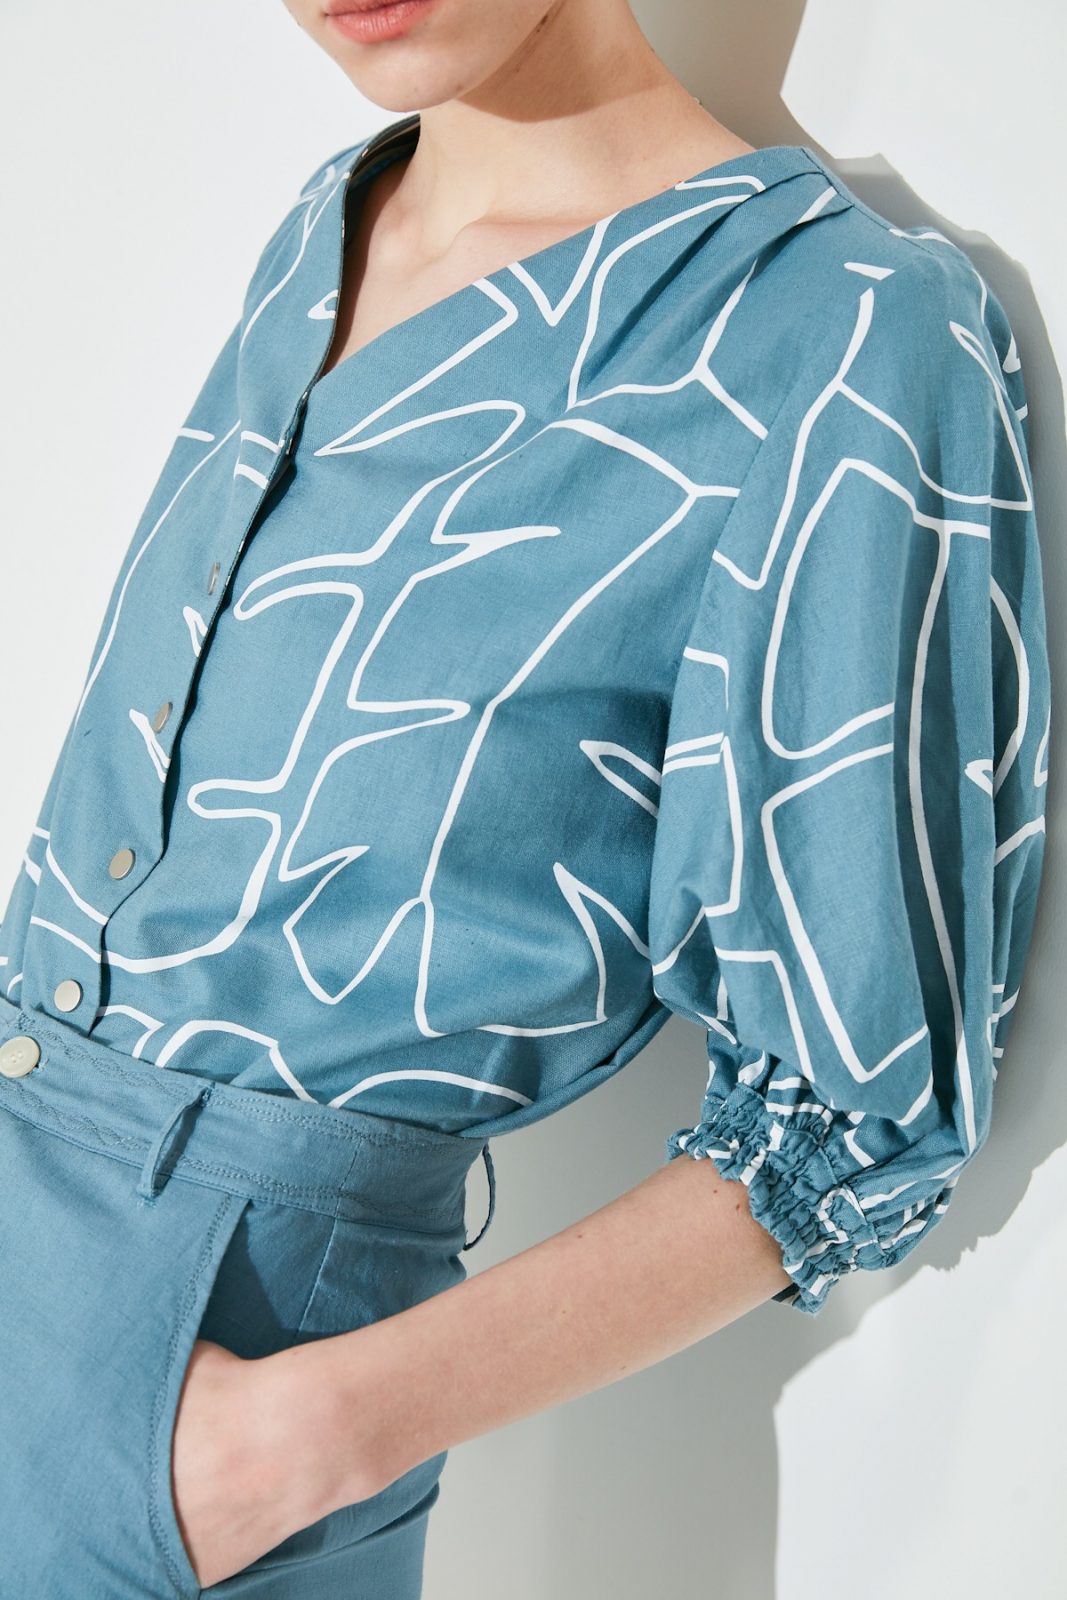 SKYE San Francisco SF ethical modern minimalist quality women clothing fashion Jolin Linen Cotton Blouse blue 6